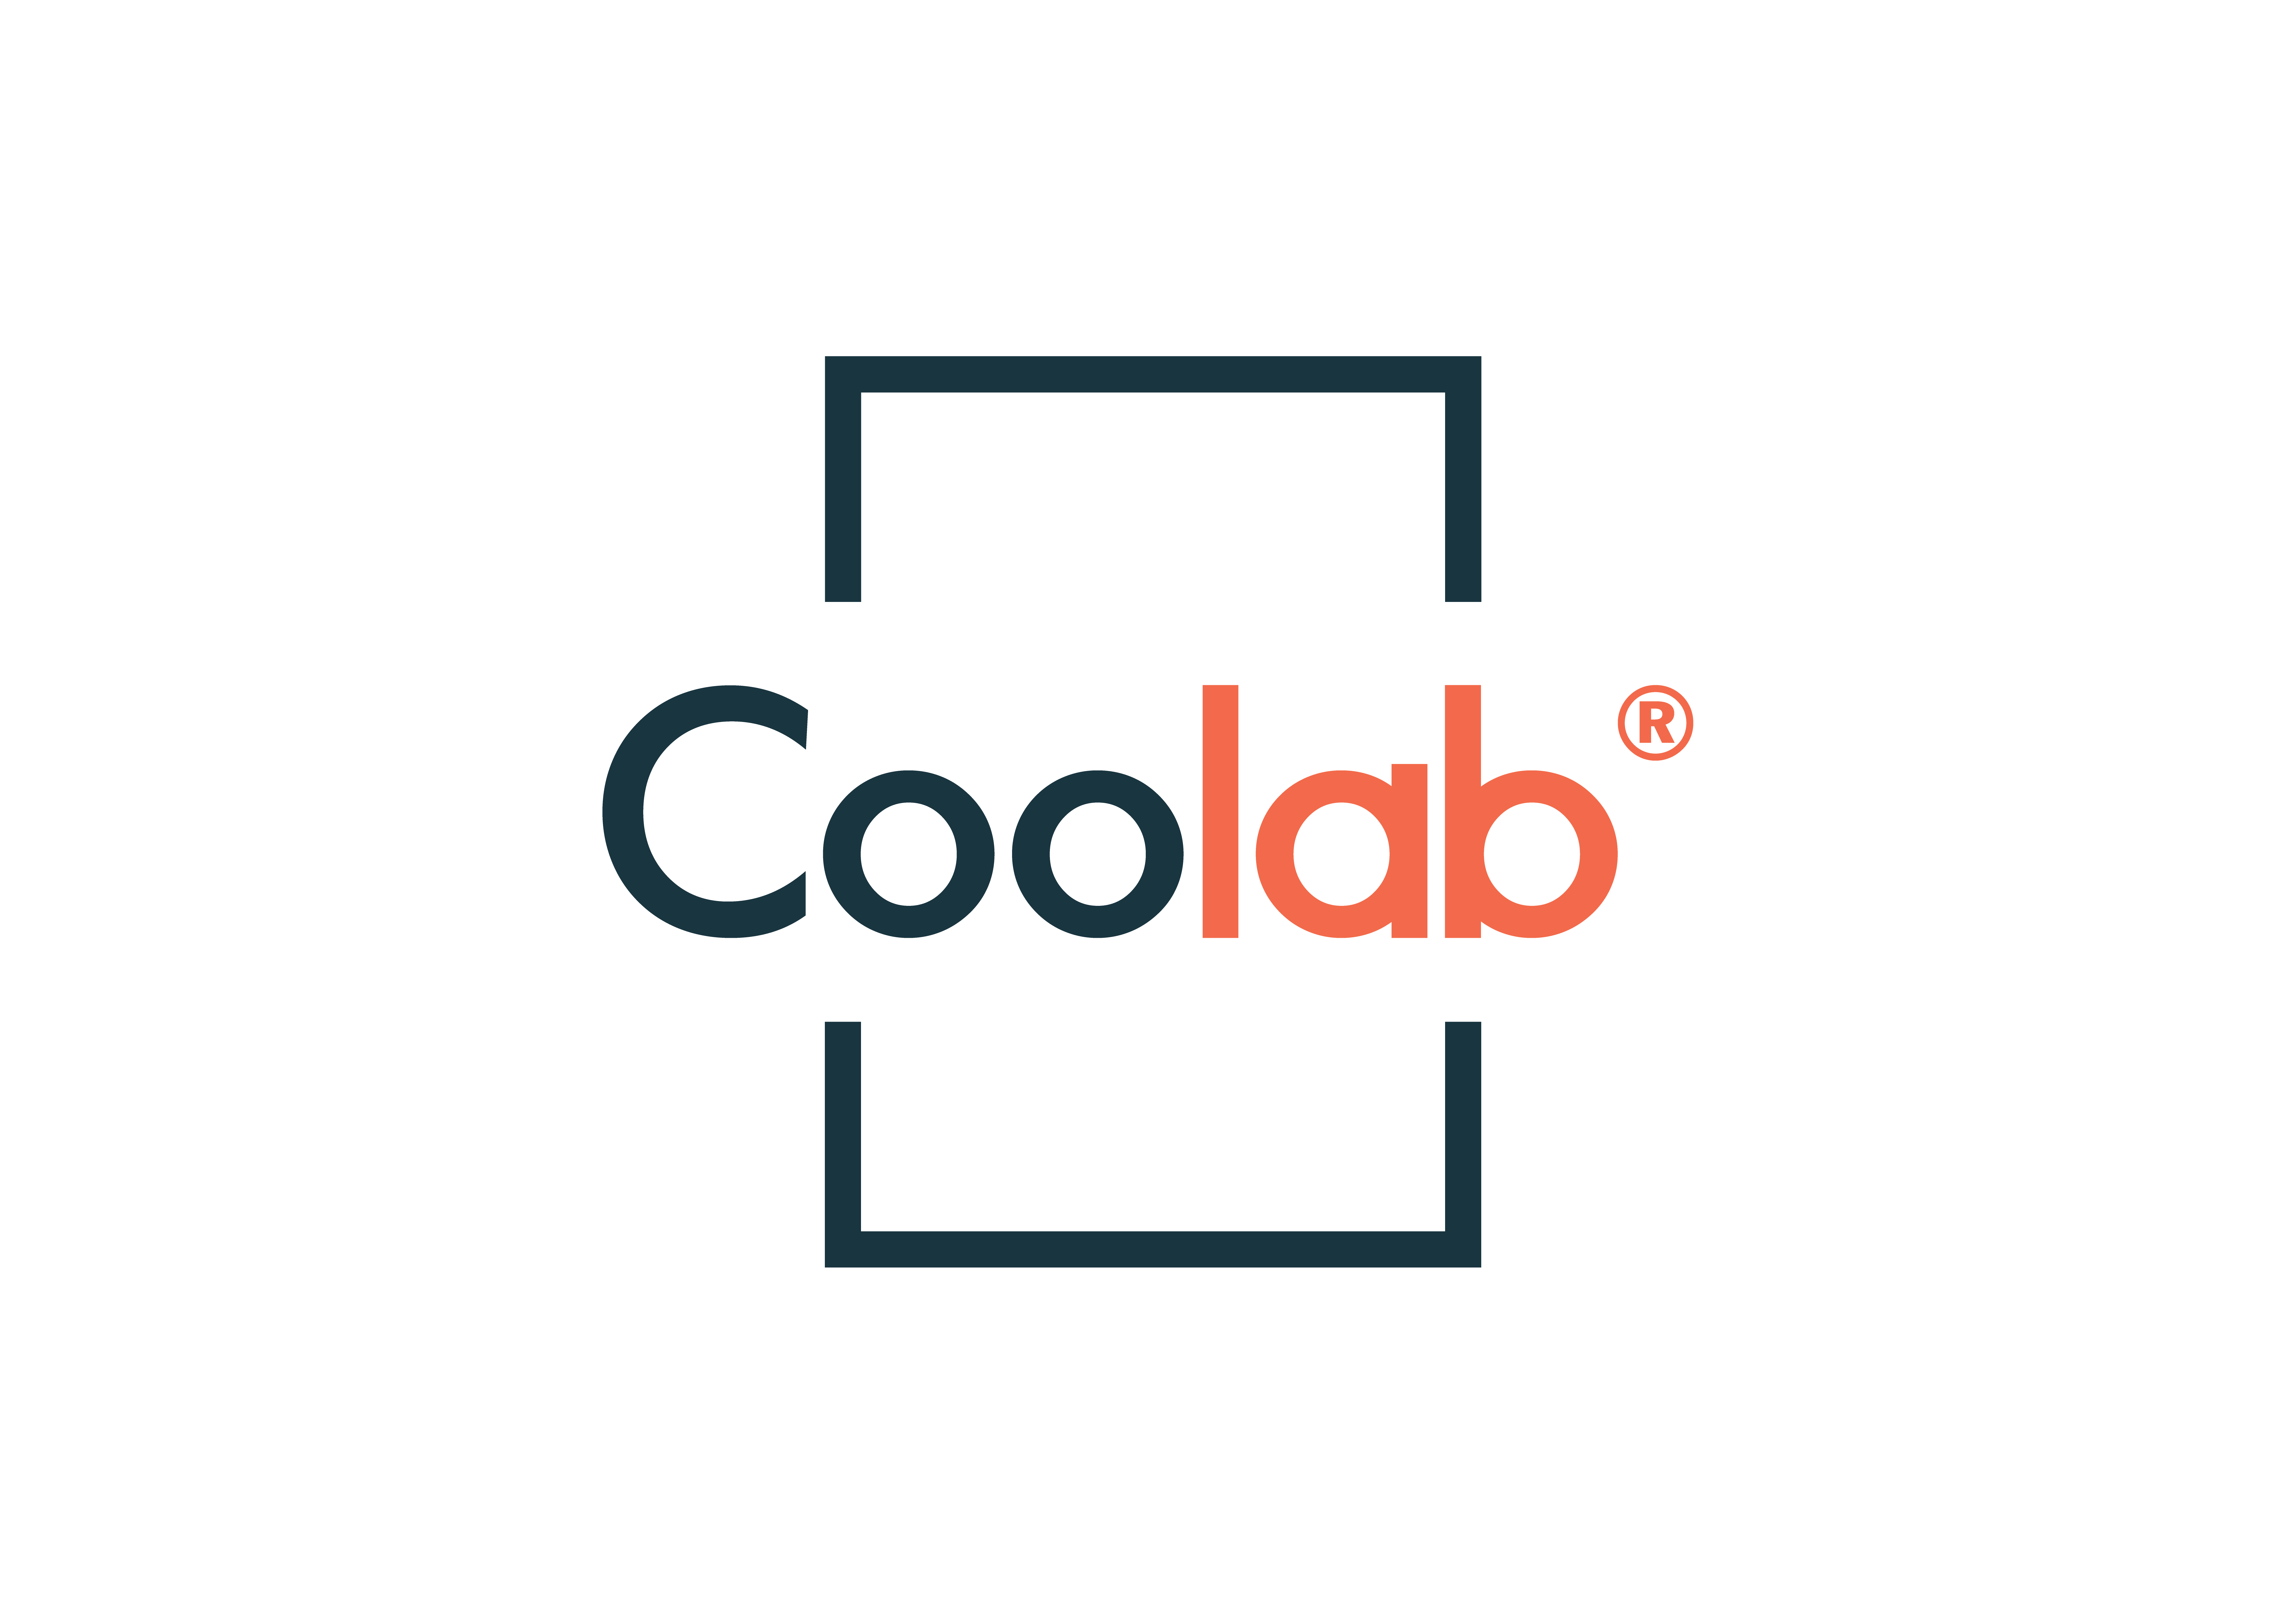 Coolab logo